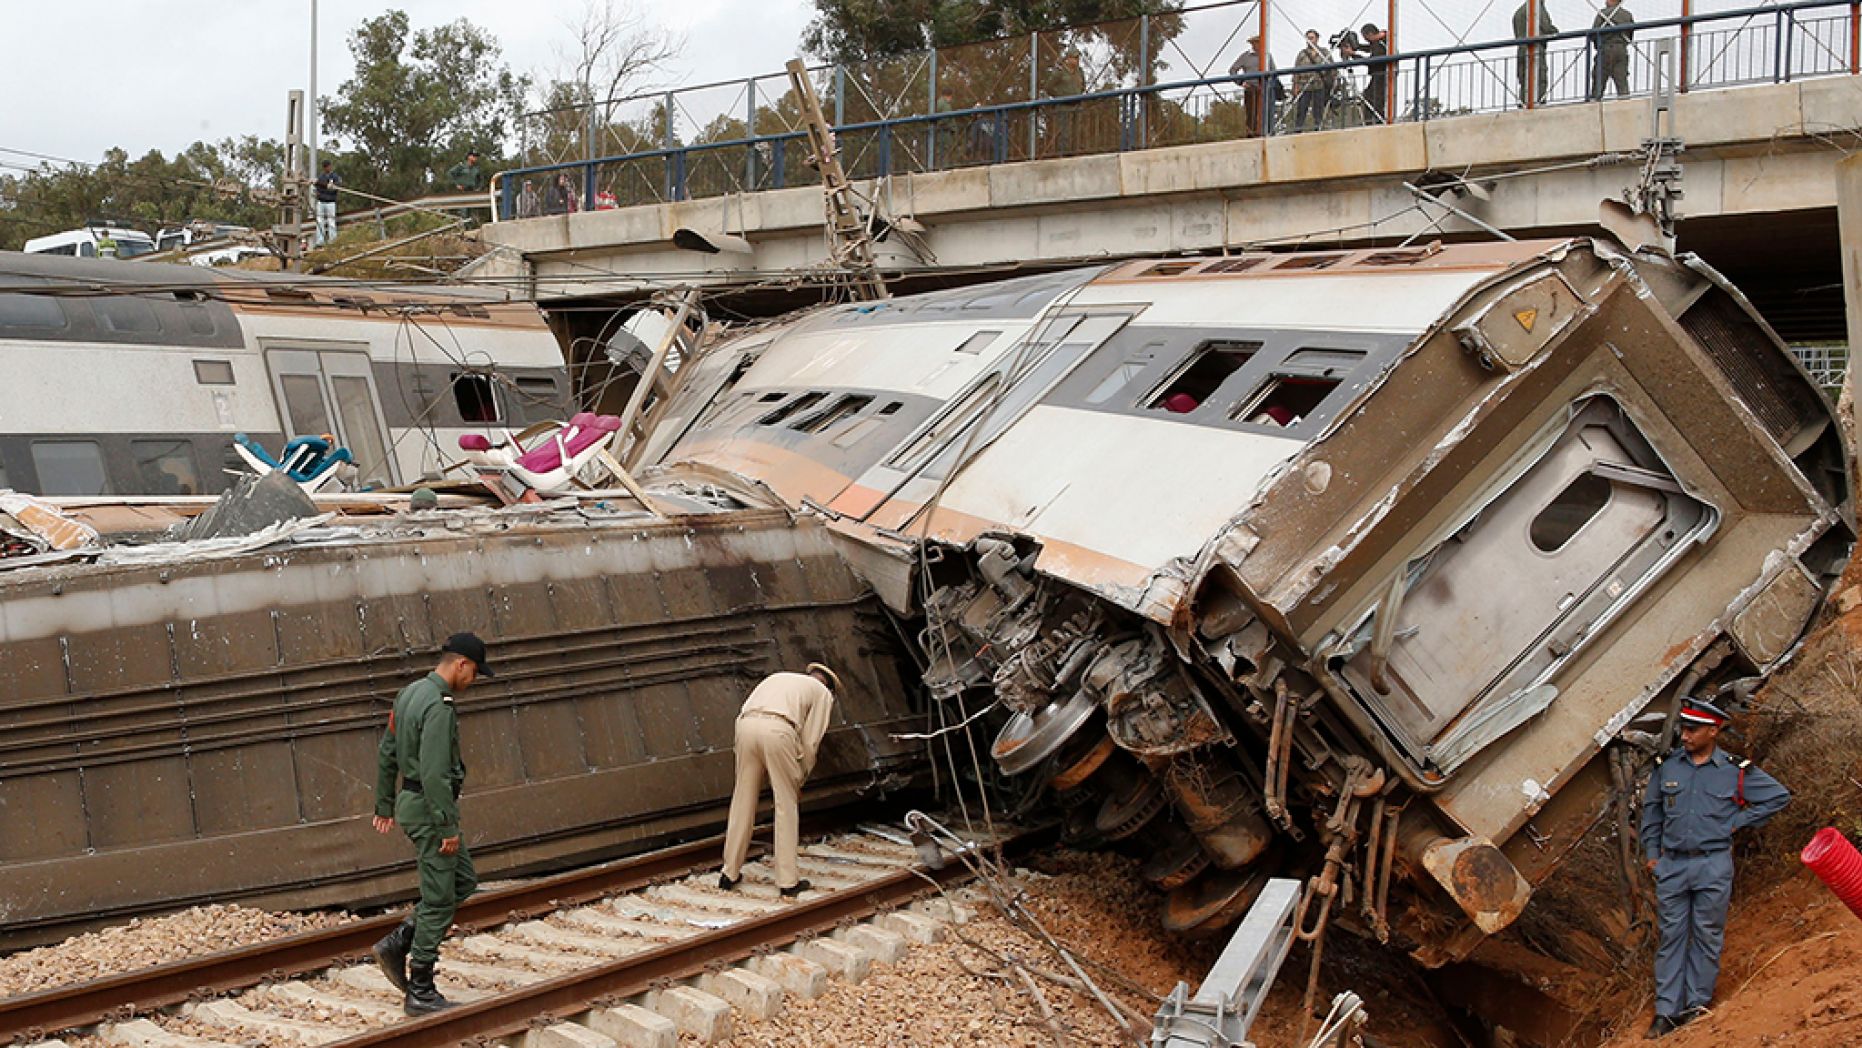 Excessive Speed to Blame for Morocco’s Tragic Train Derailment